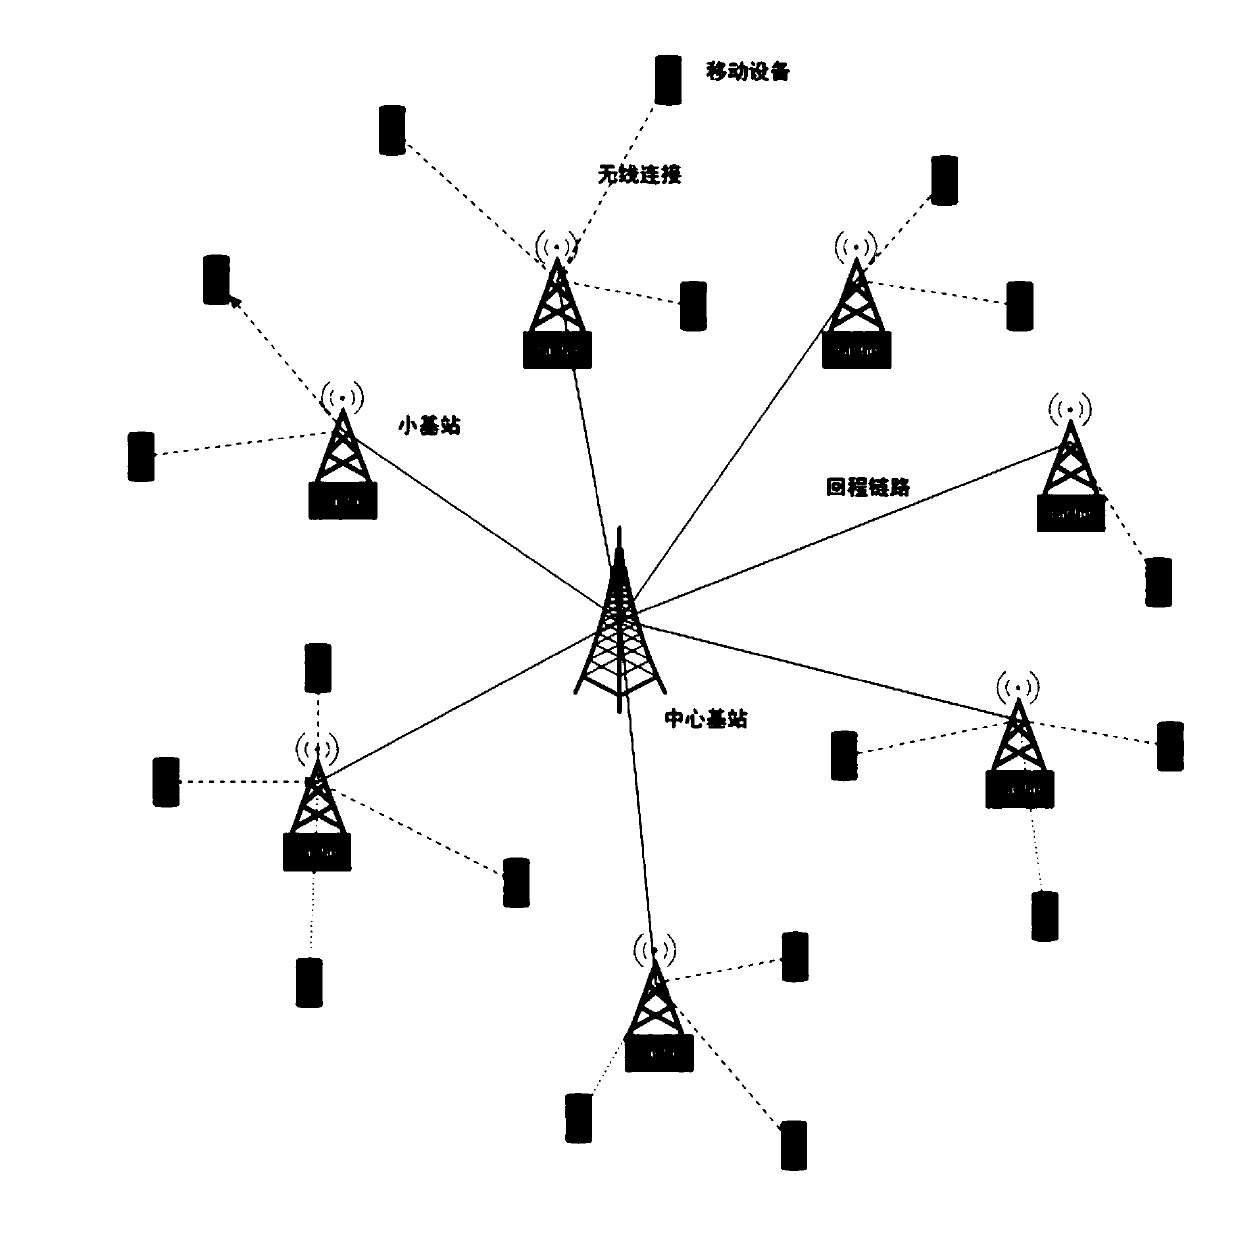 Wireless heterogeneous network file cache updating method based on multicast